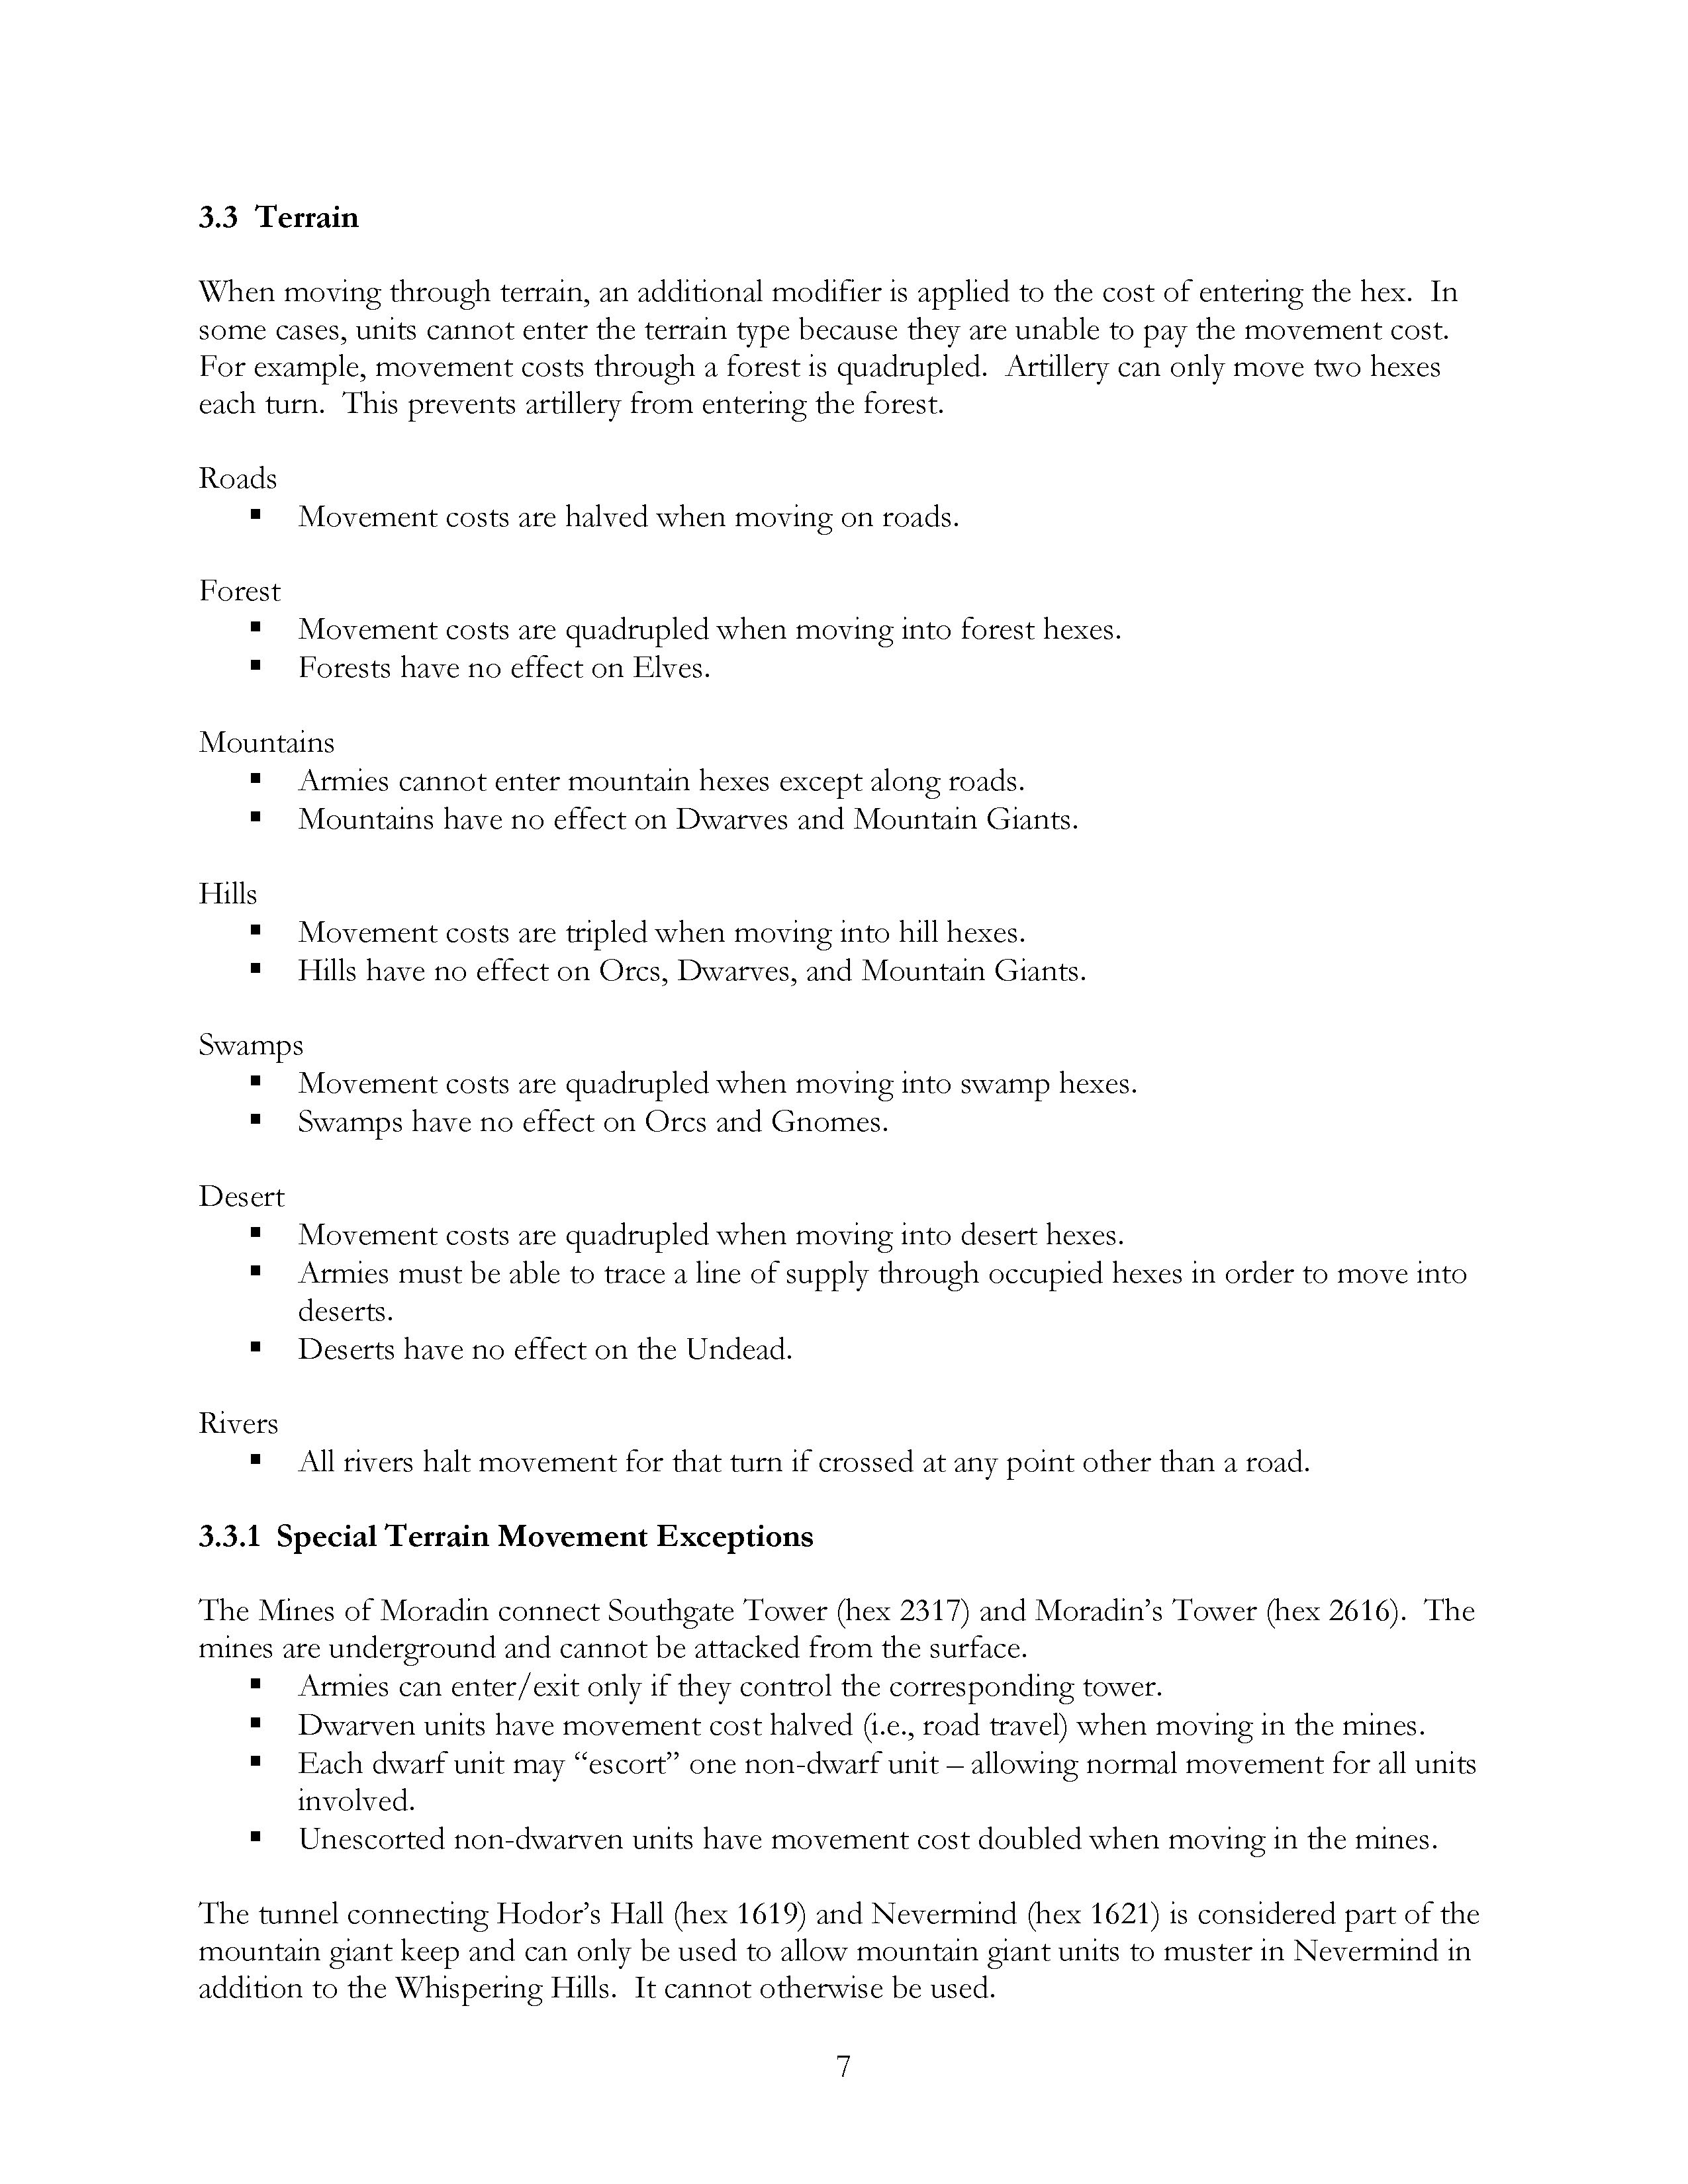 Witenagemot Rules 10 Page 08.jpg